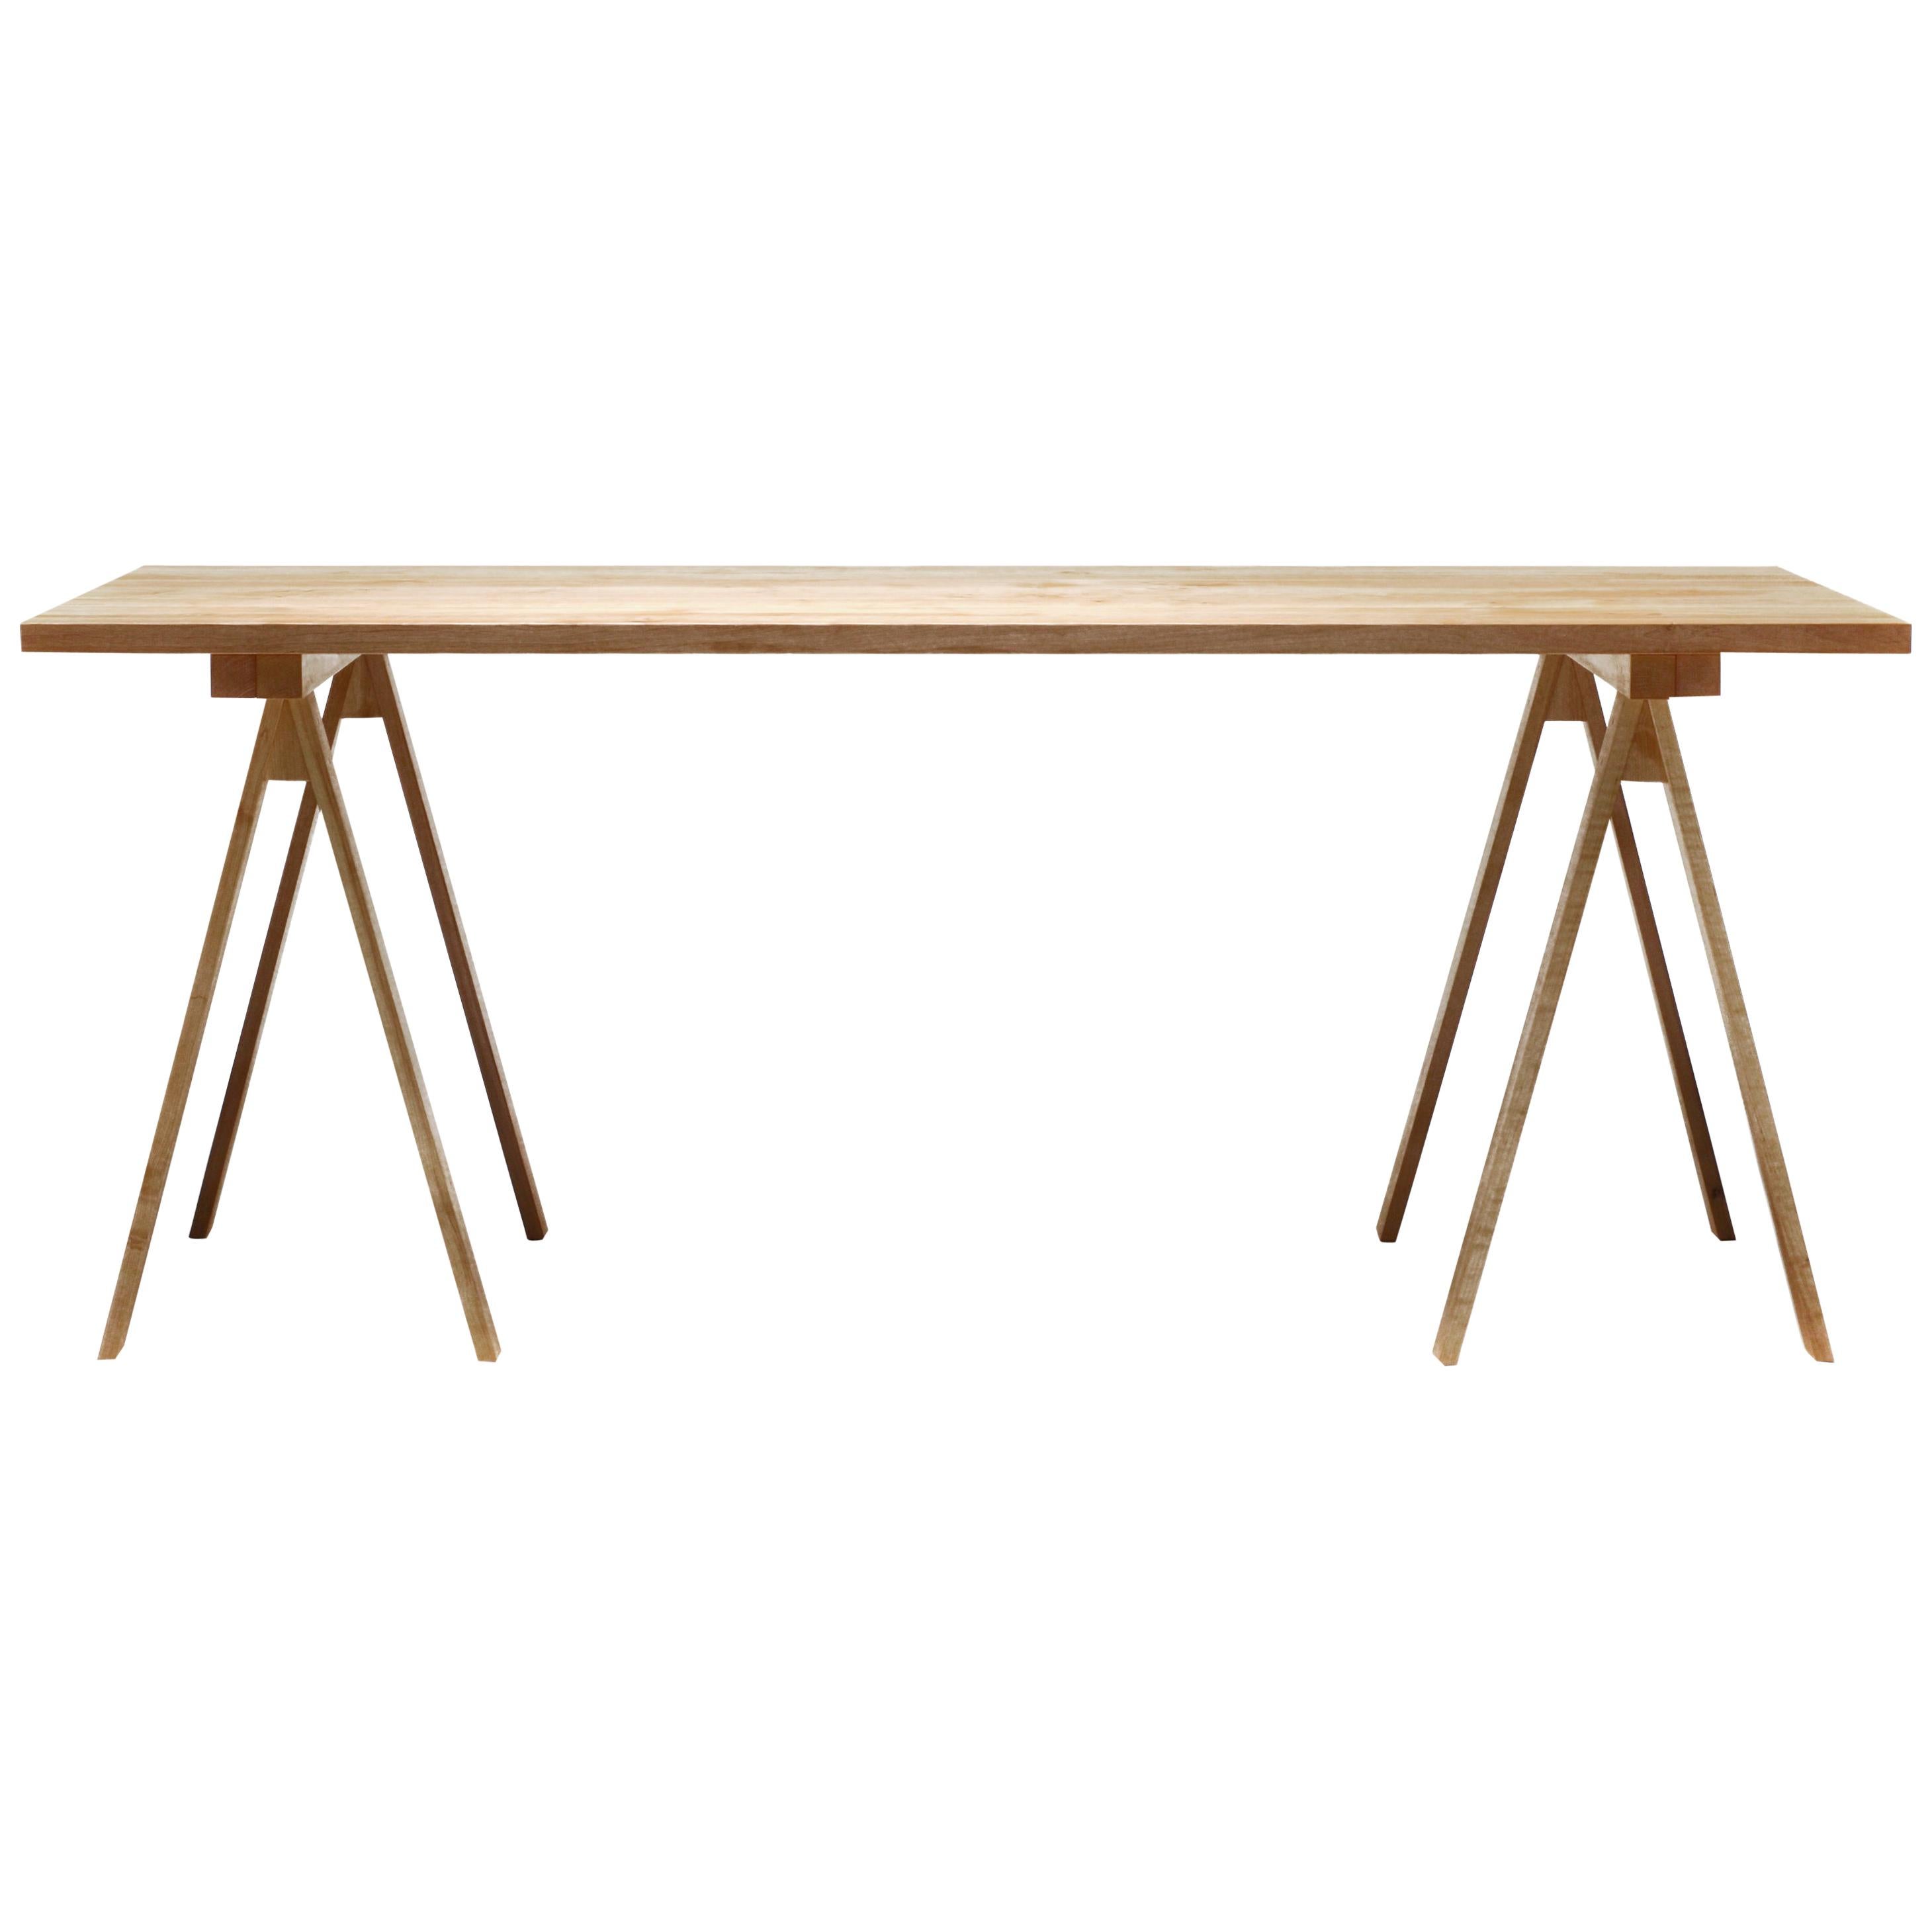 Arkitecture Table Top in Birch by Kari Virtanen